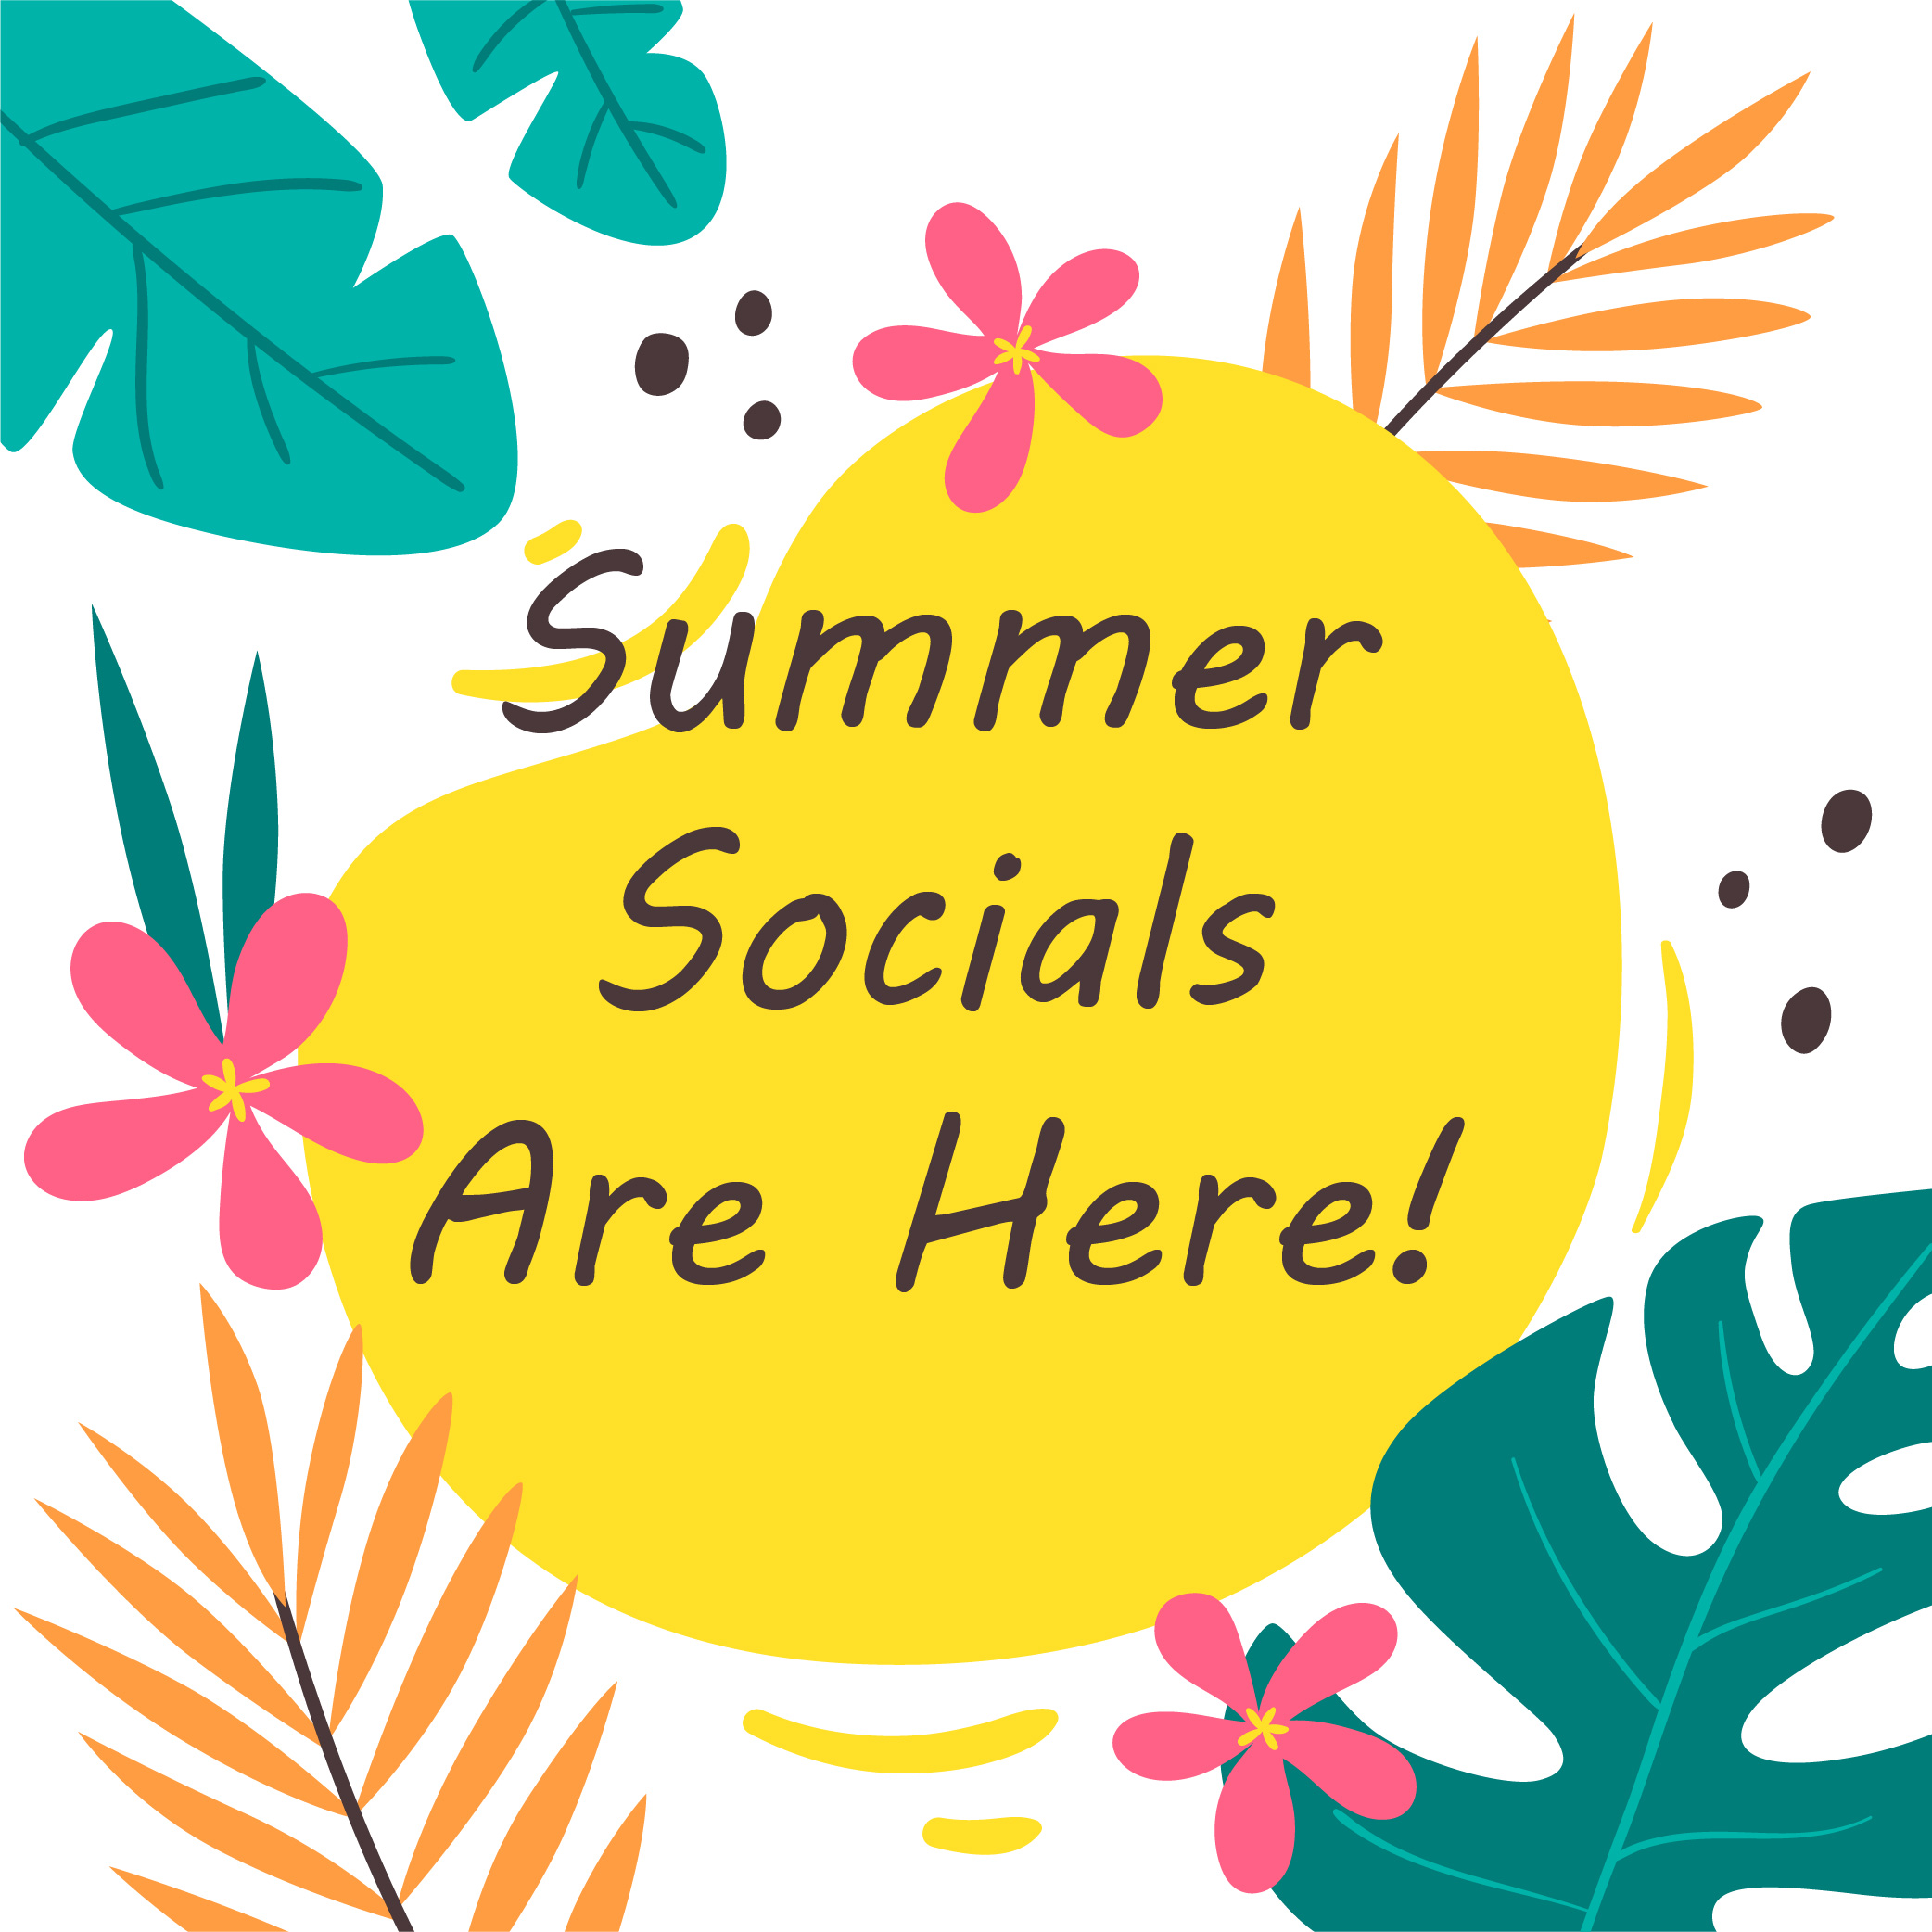 Summer Socials Are Here!